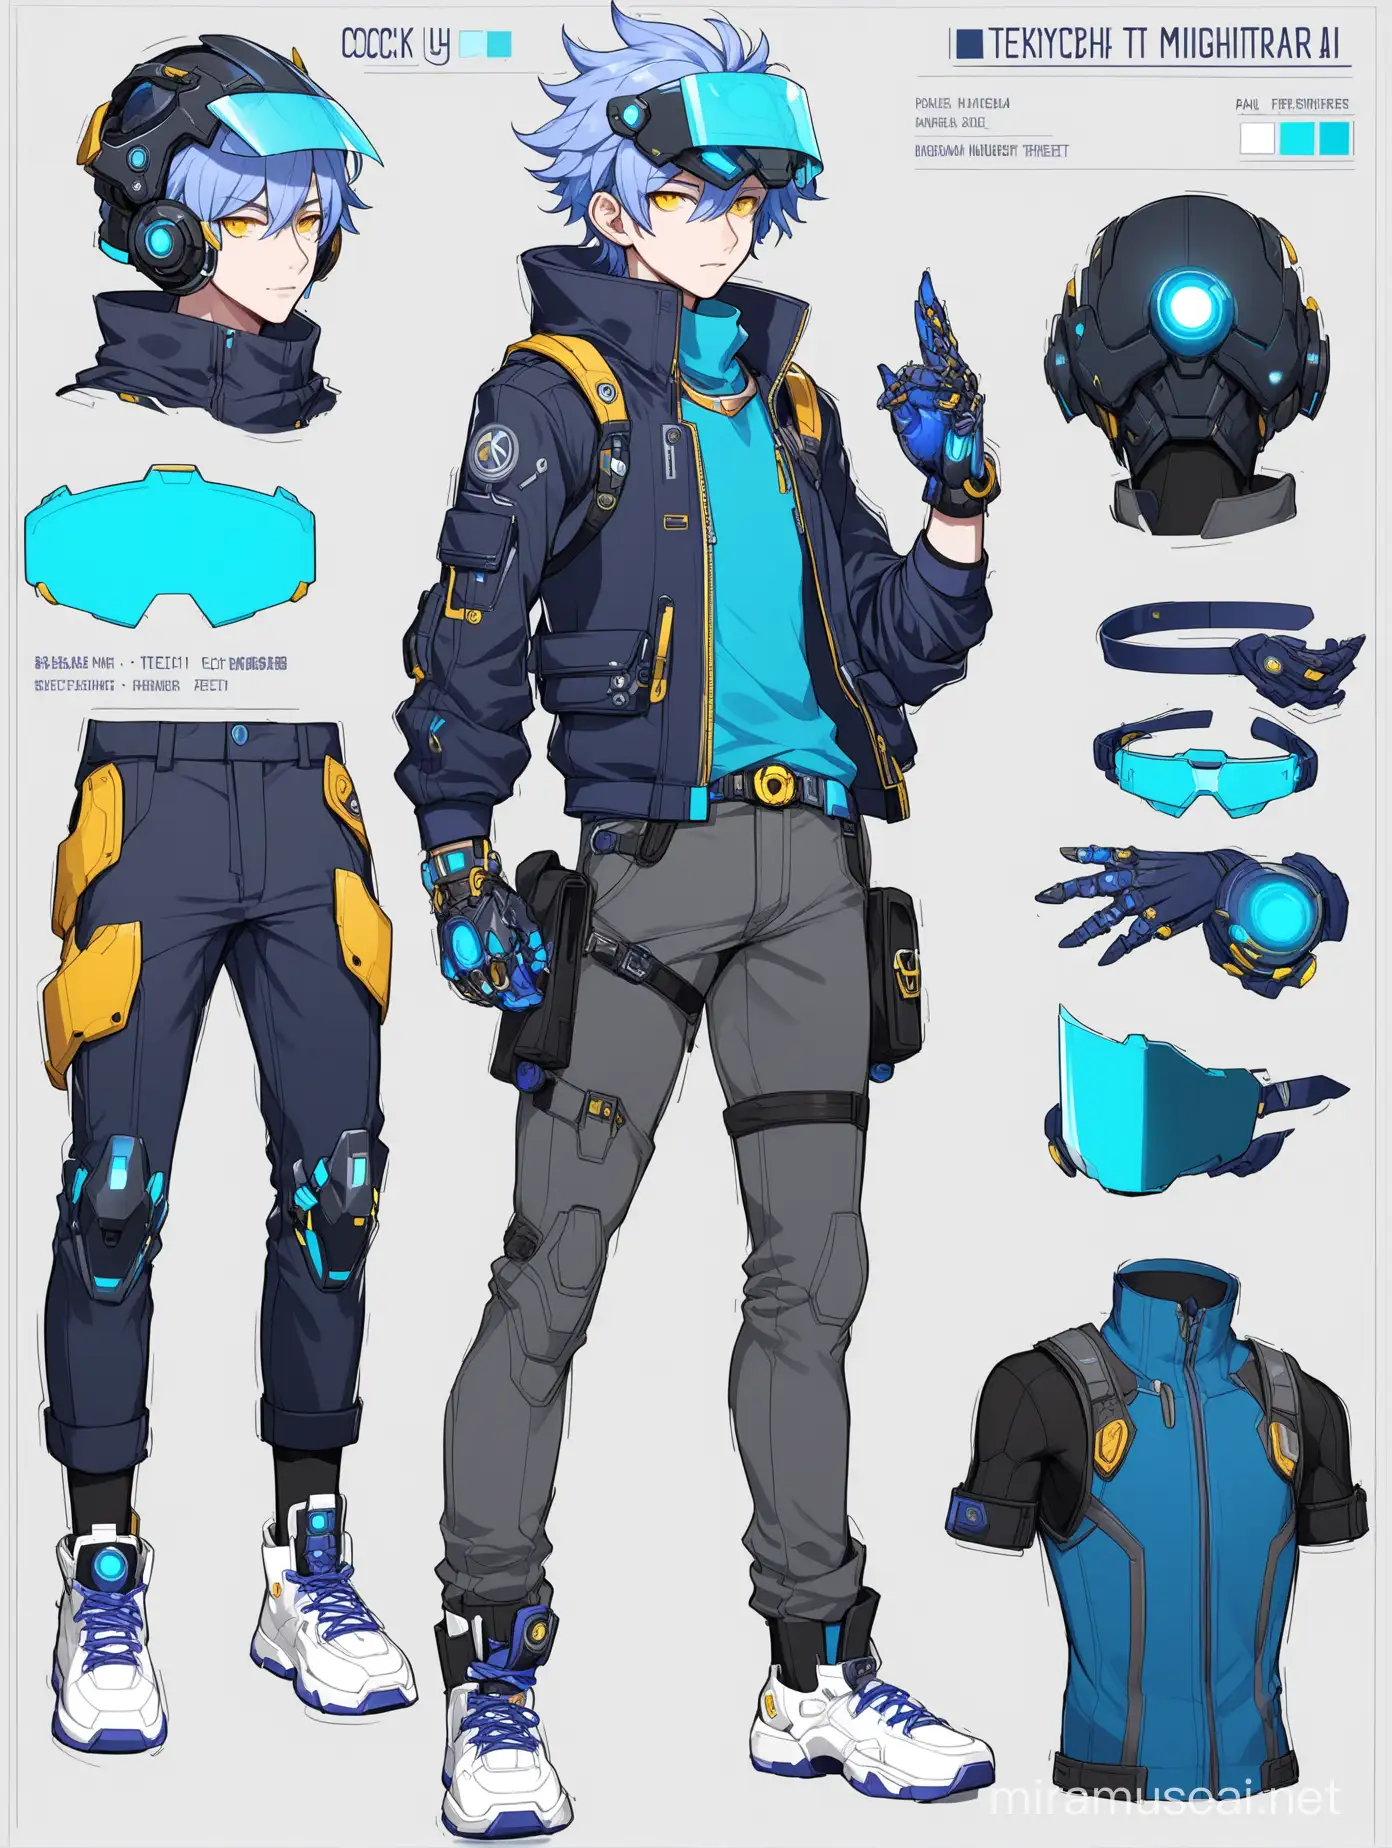 Cyberpunk Teenage Boy with Dragon Visor and HiTech Gauntlets